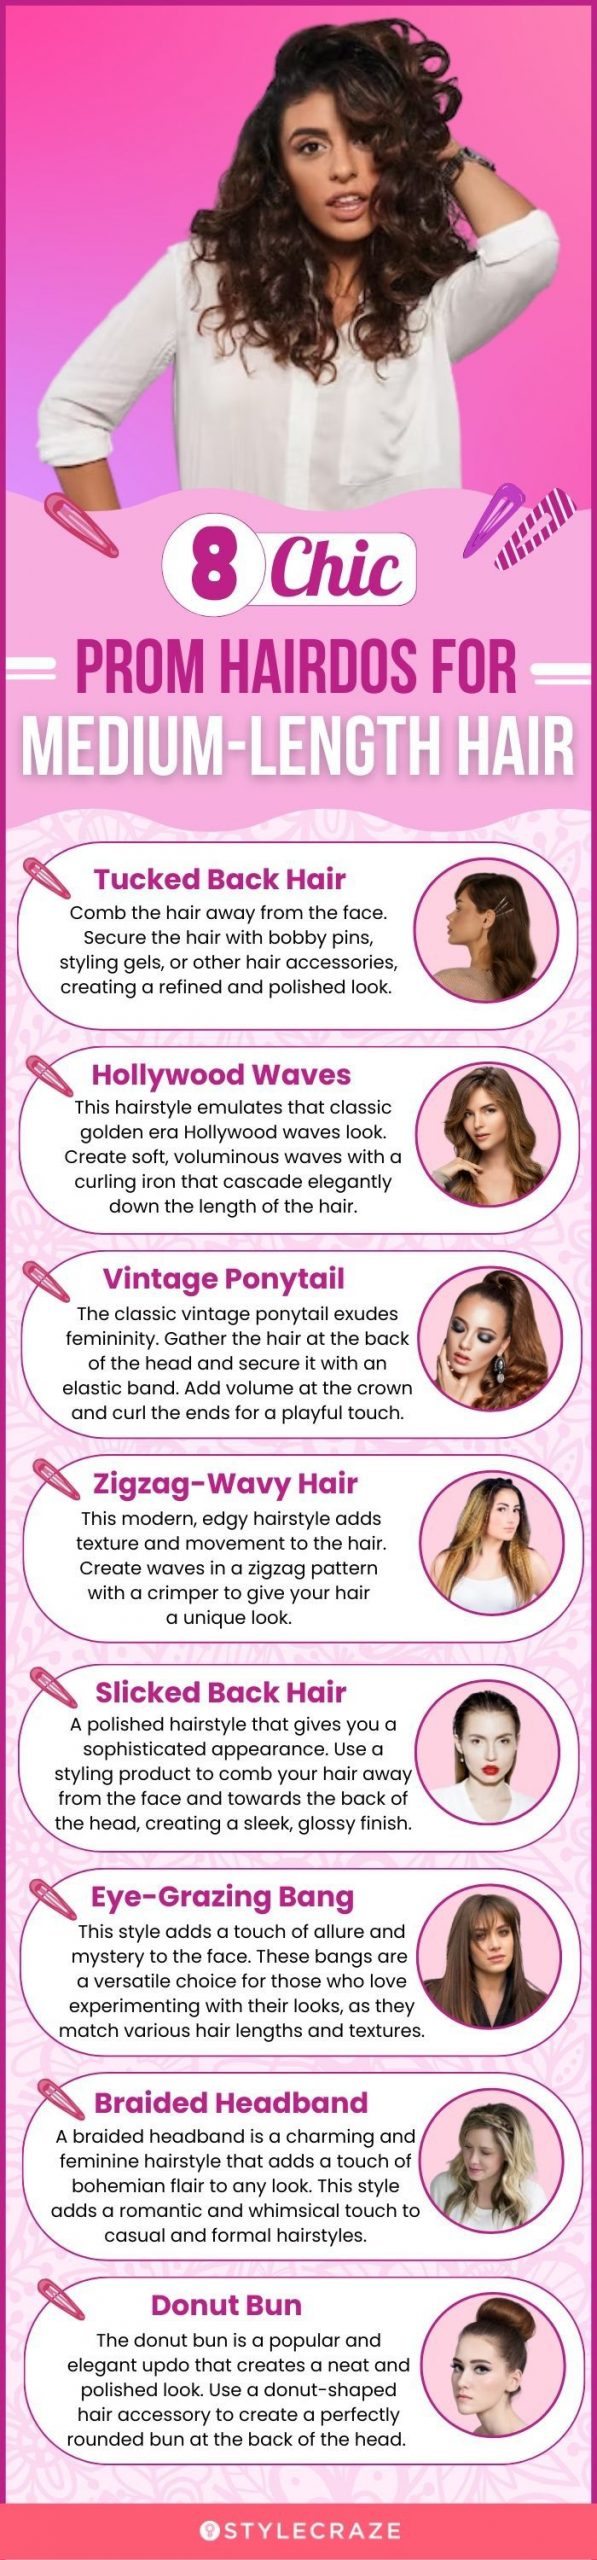 8 chic prom hairdos for medium length hair (infographic)